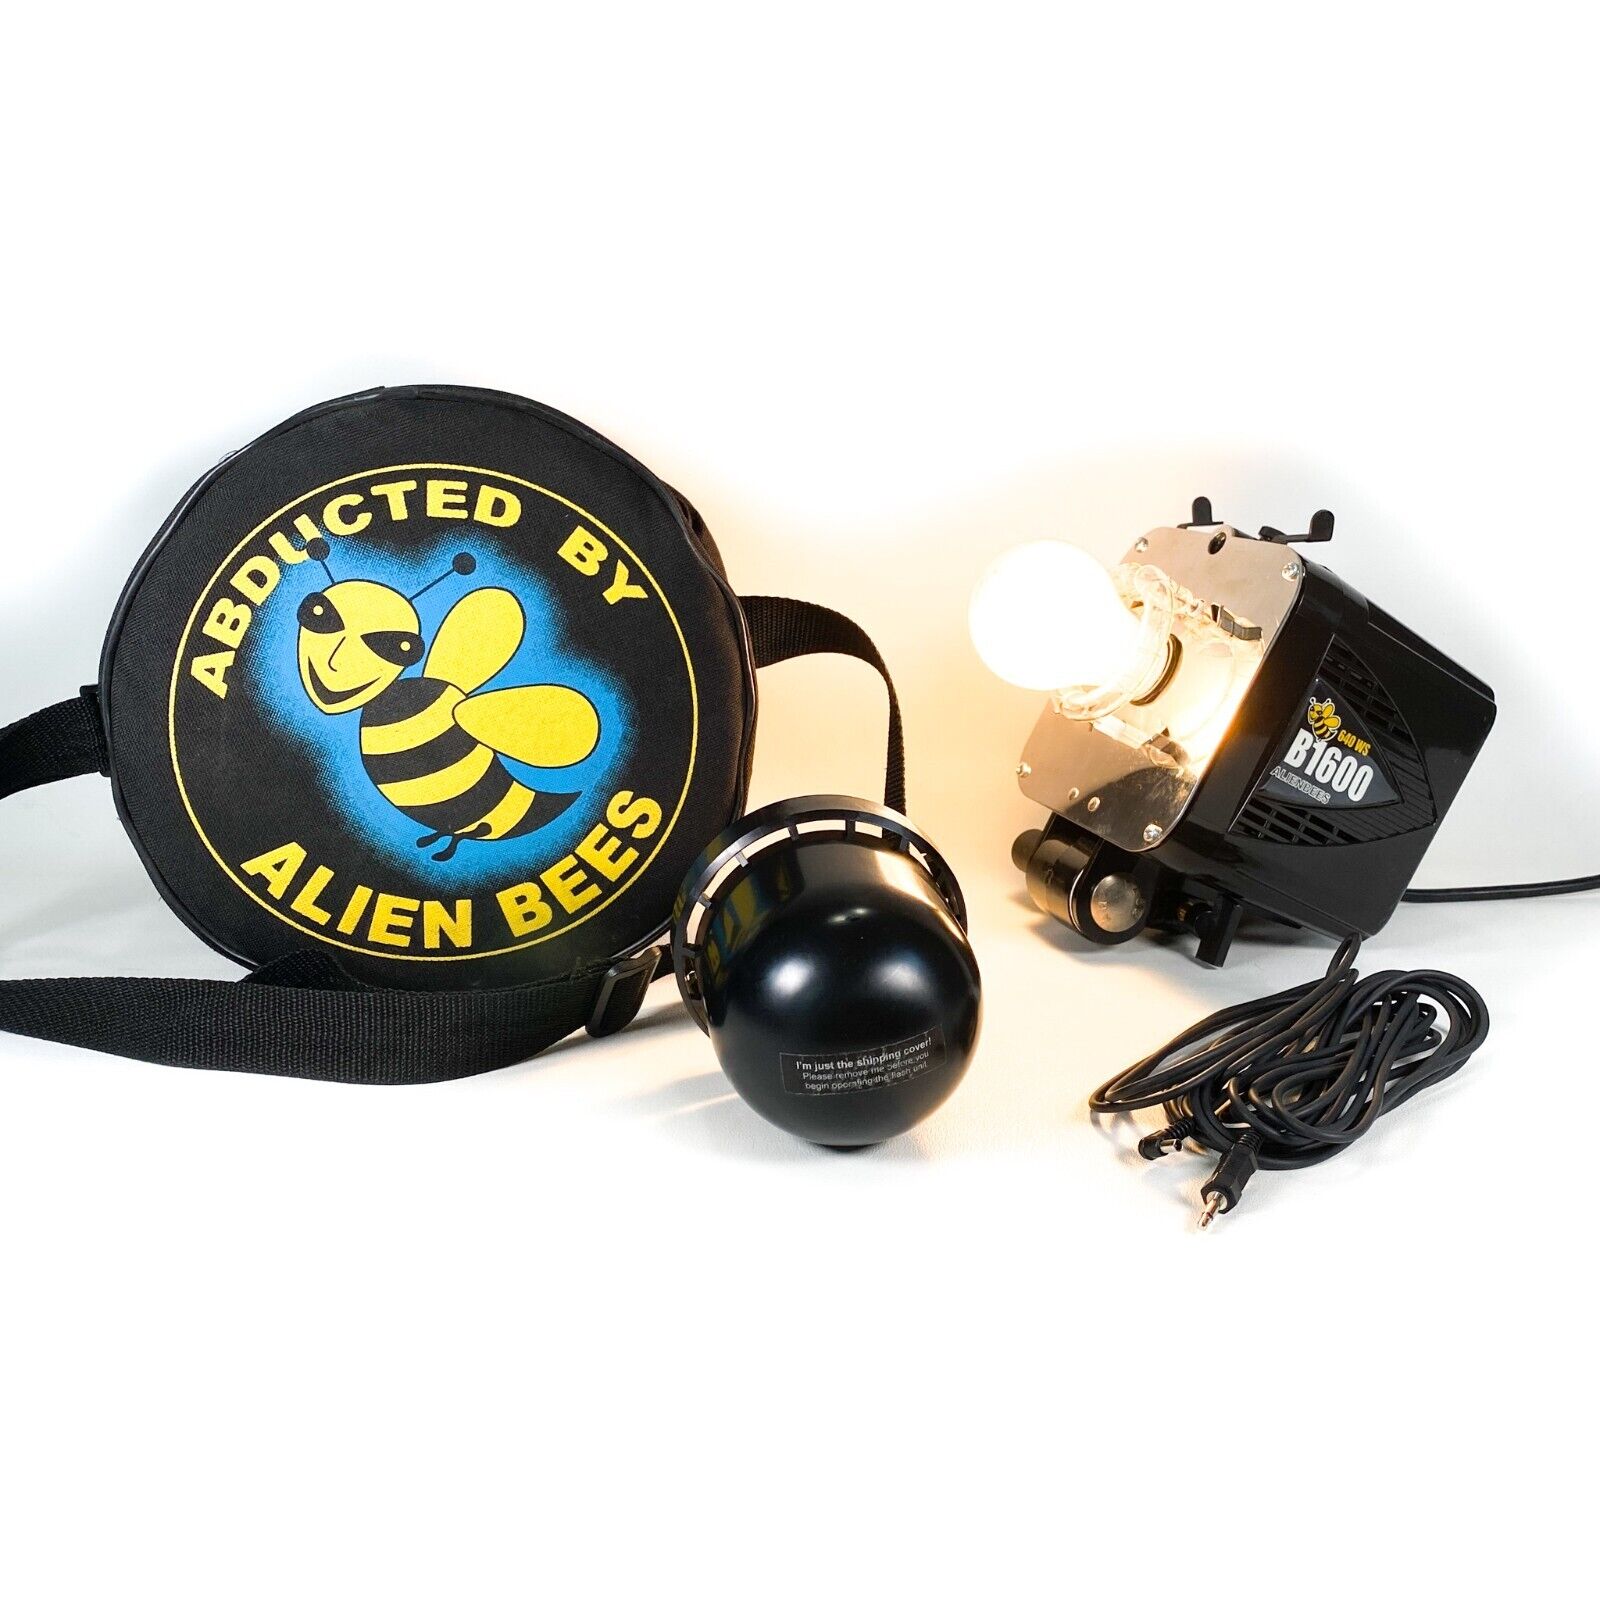 Paul C. Buff B1600 640 Ws Alienbees Flash Head Pro Monolight With Bag